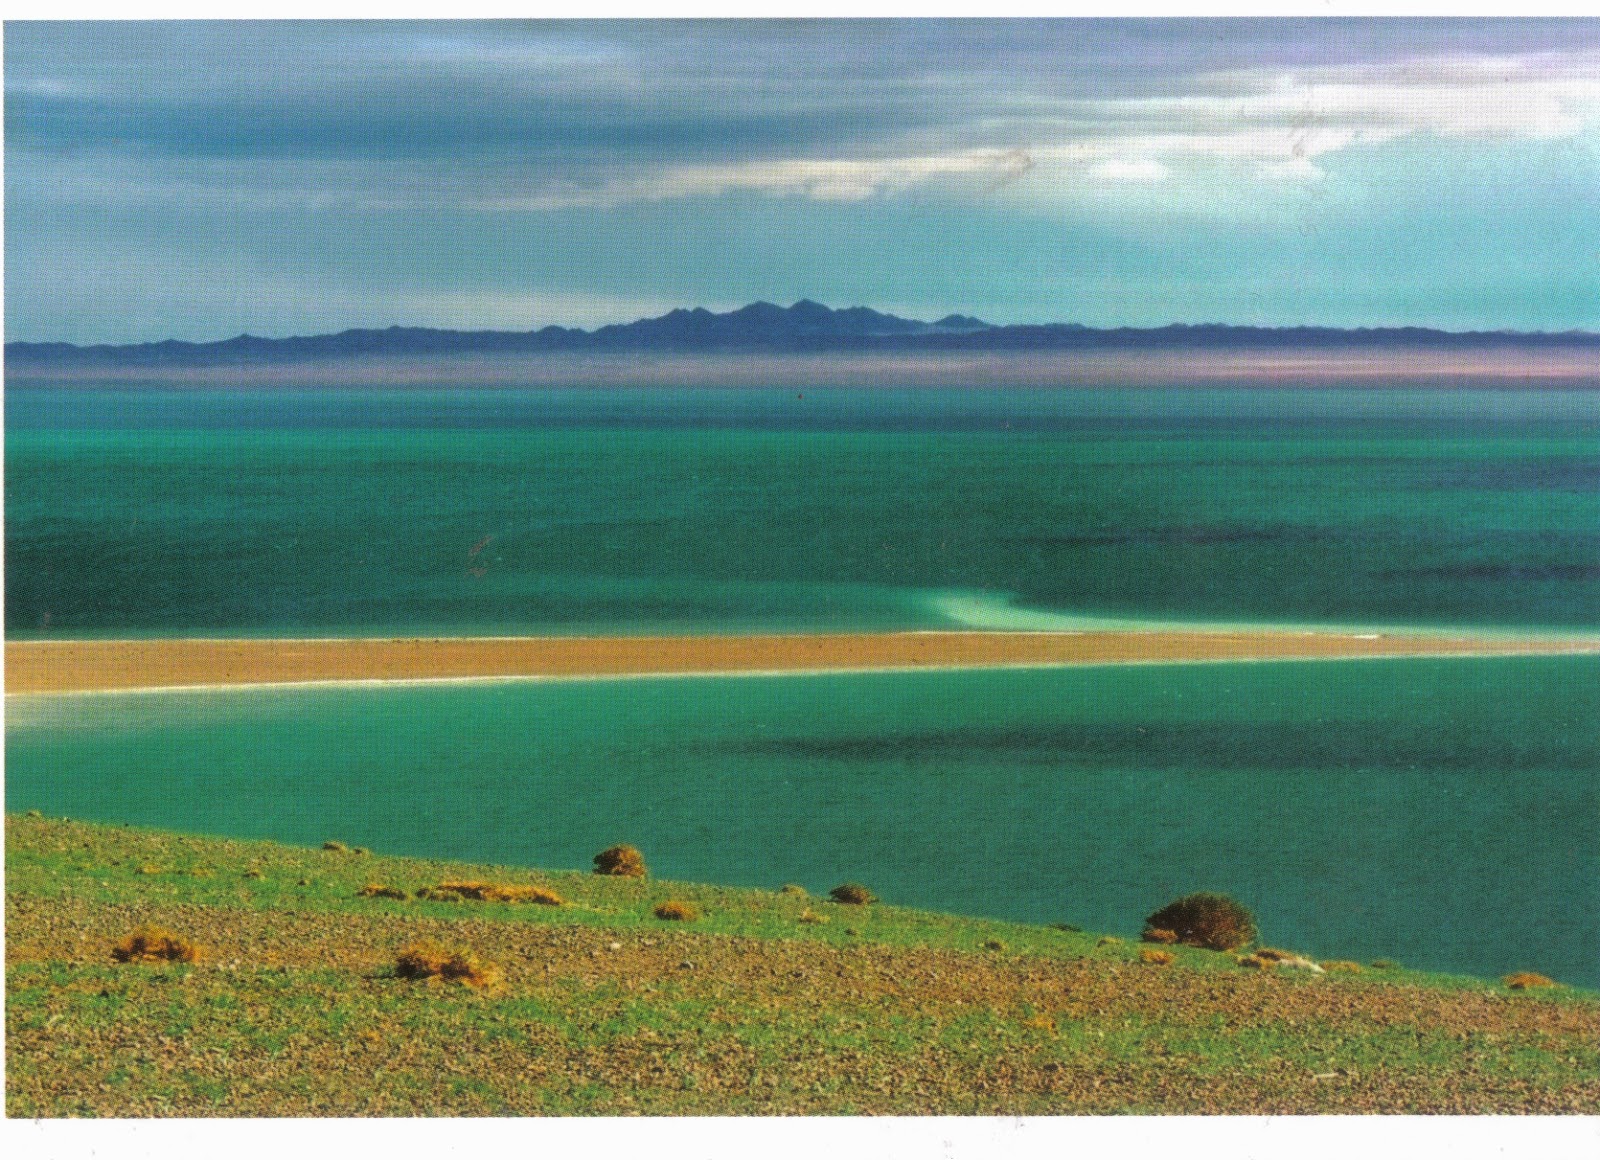 Котловина больших озер. Хяргас нуур Монголия. Озеро Уурэг-нуур. Котловина больших озер в Монголии. Хяргас нуур озеро.